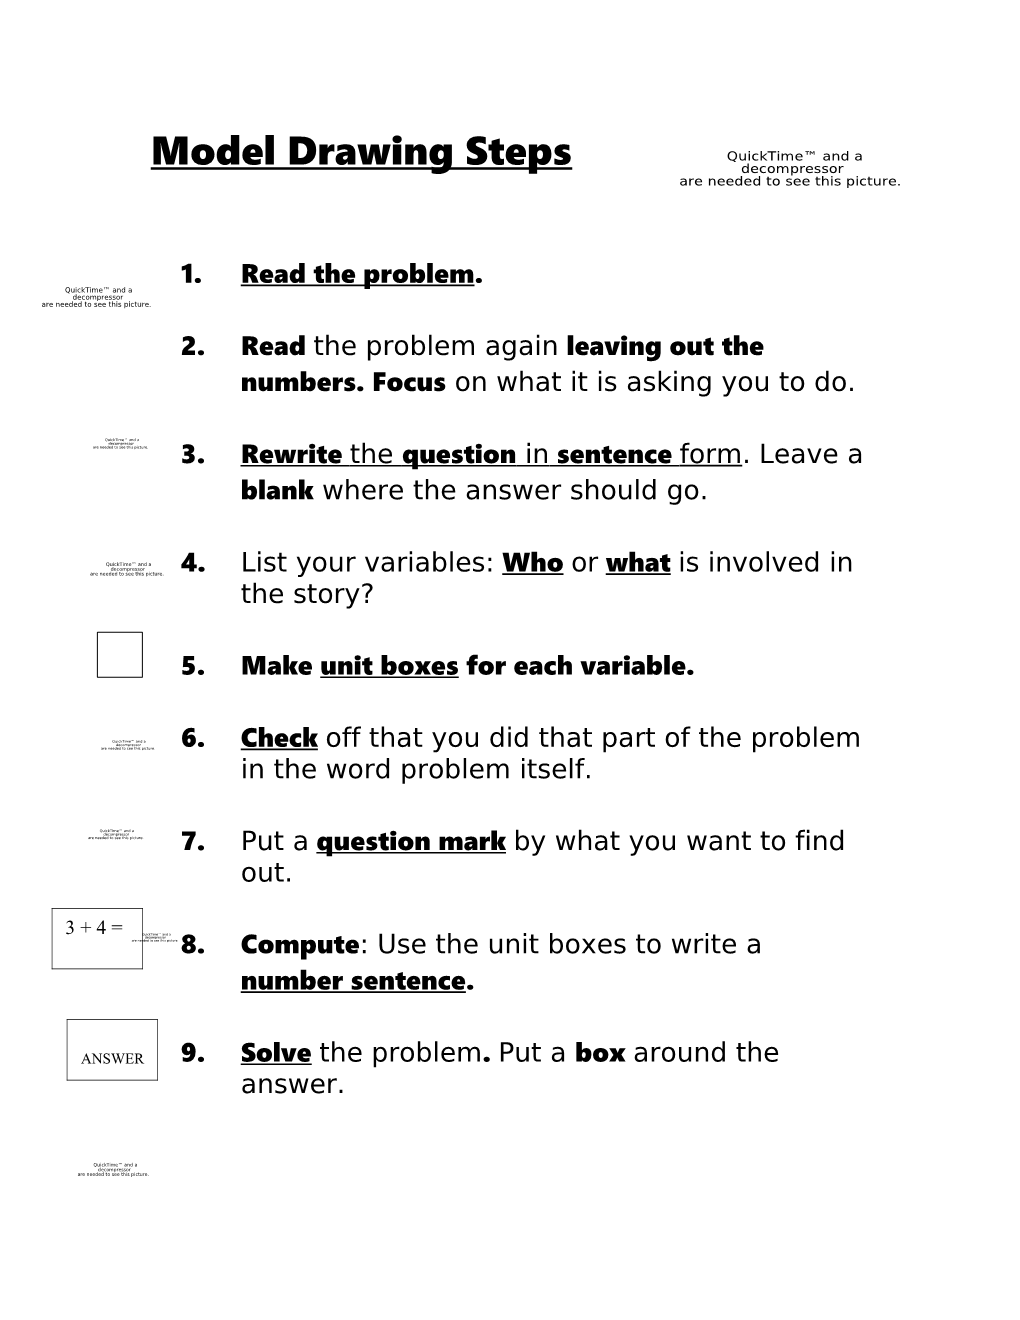 Model Drawing Steps